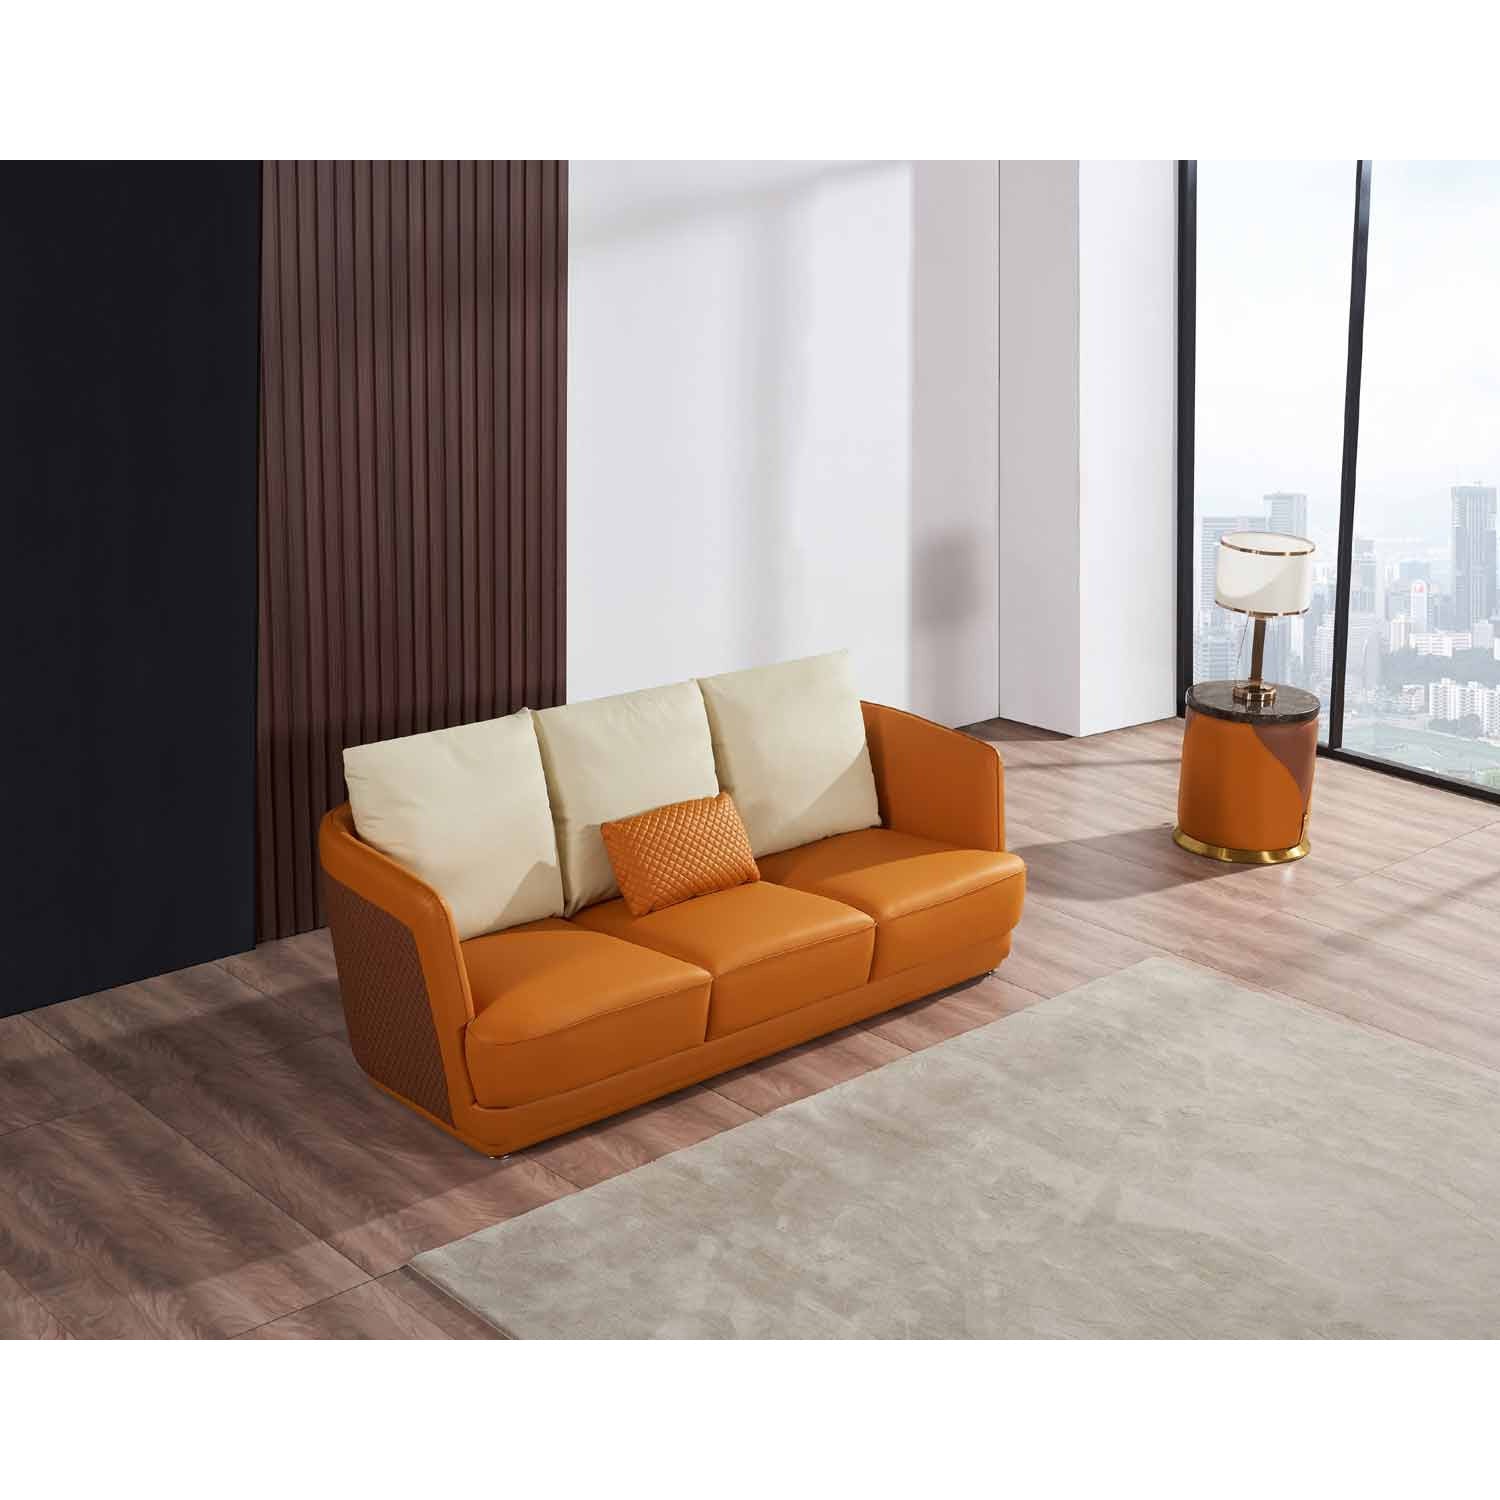 European Furniture - Glamour 3 Piece Living Room Set in Orange-Brown - 51619-3SET - New Star Living